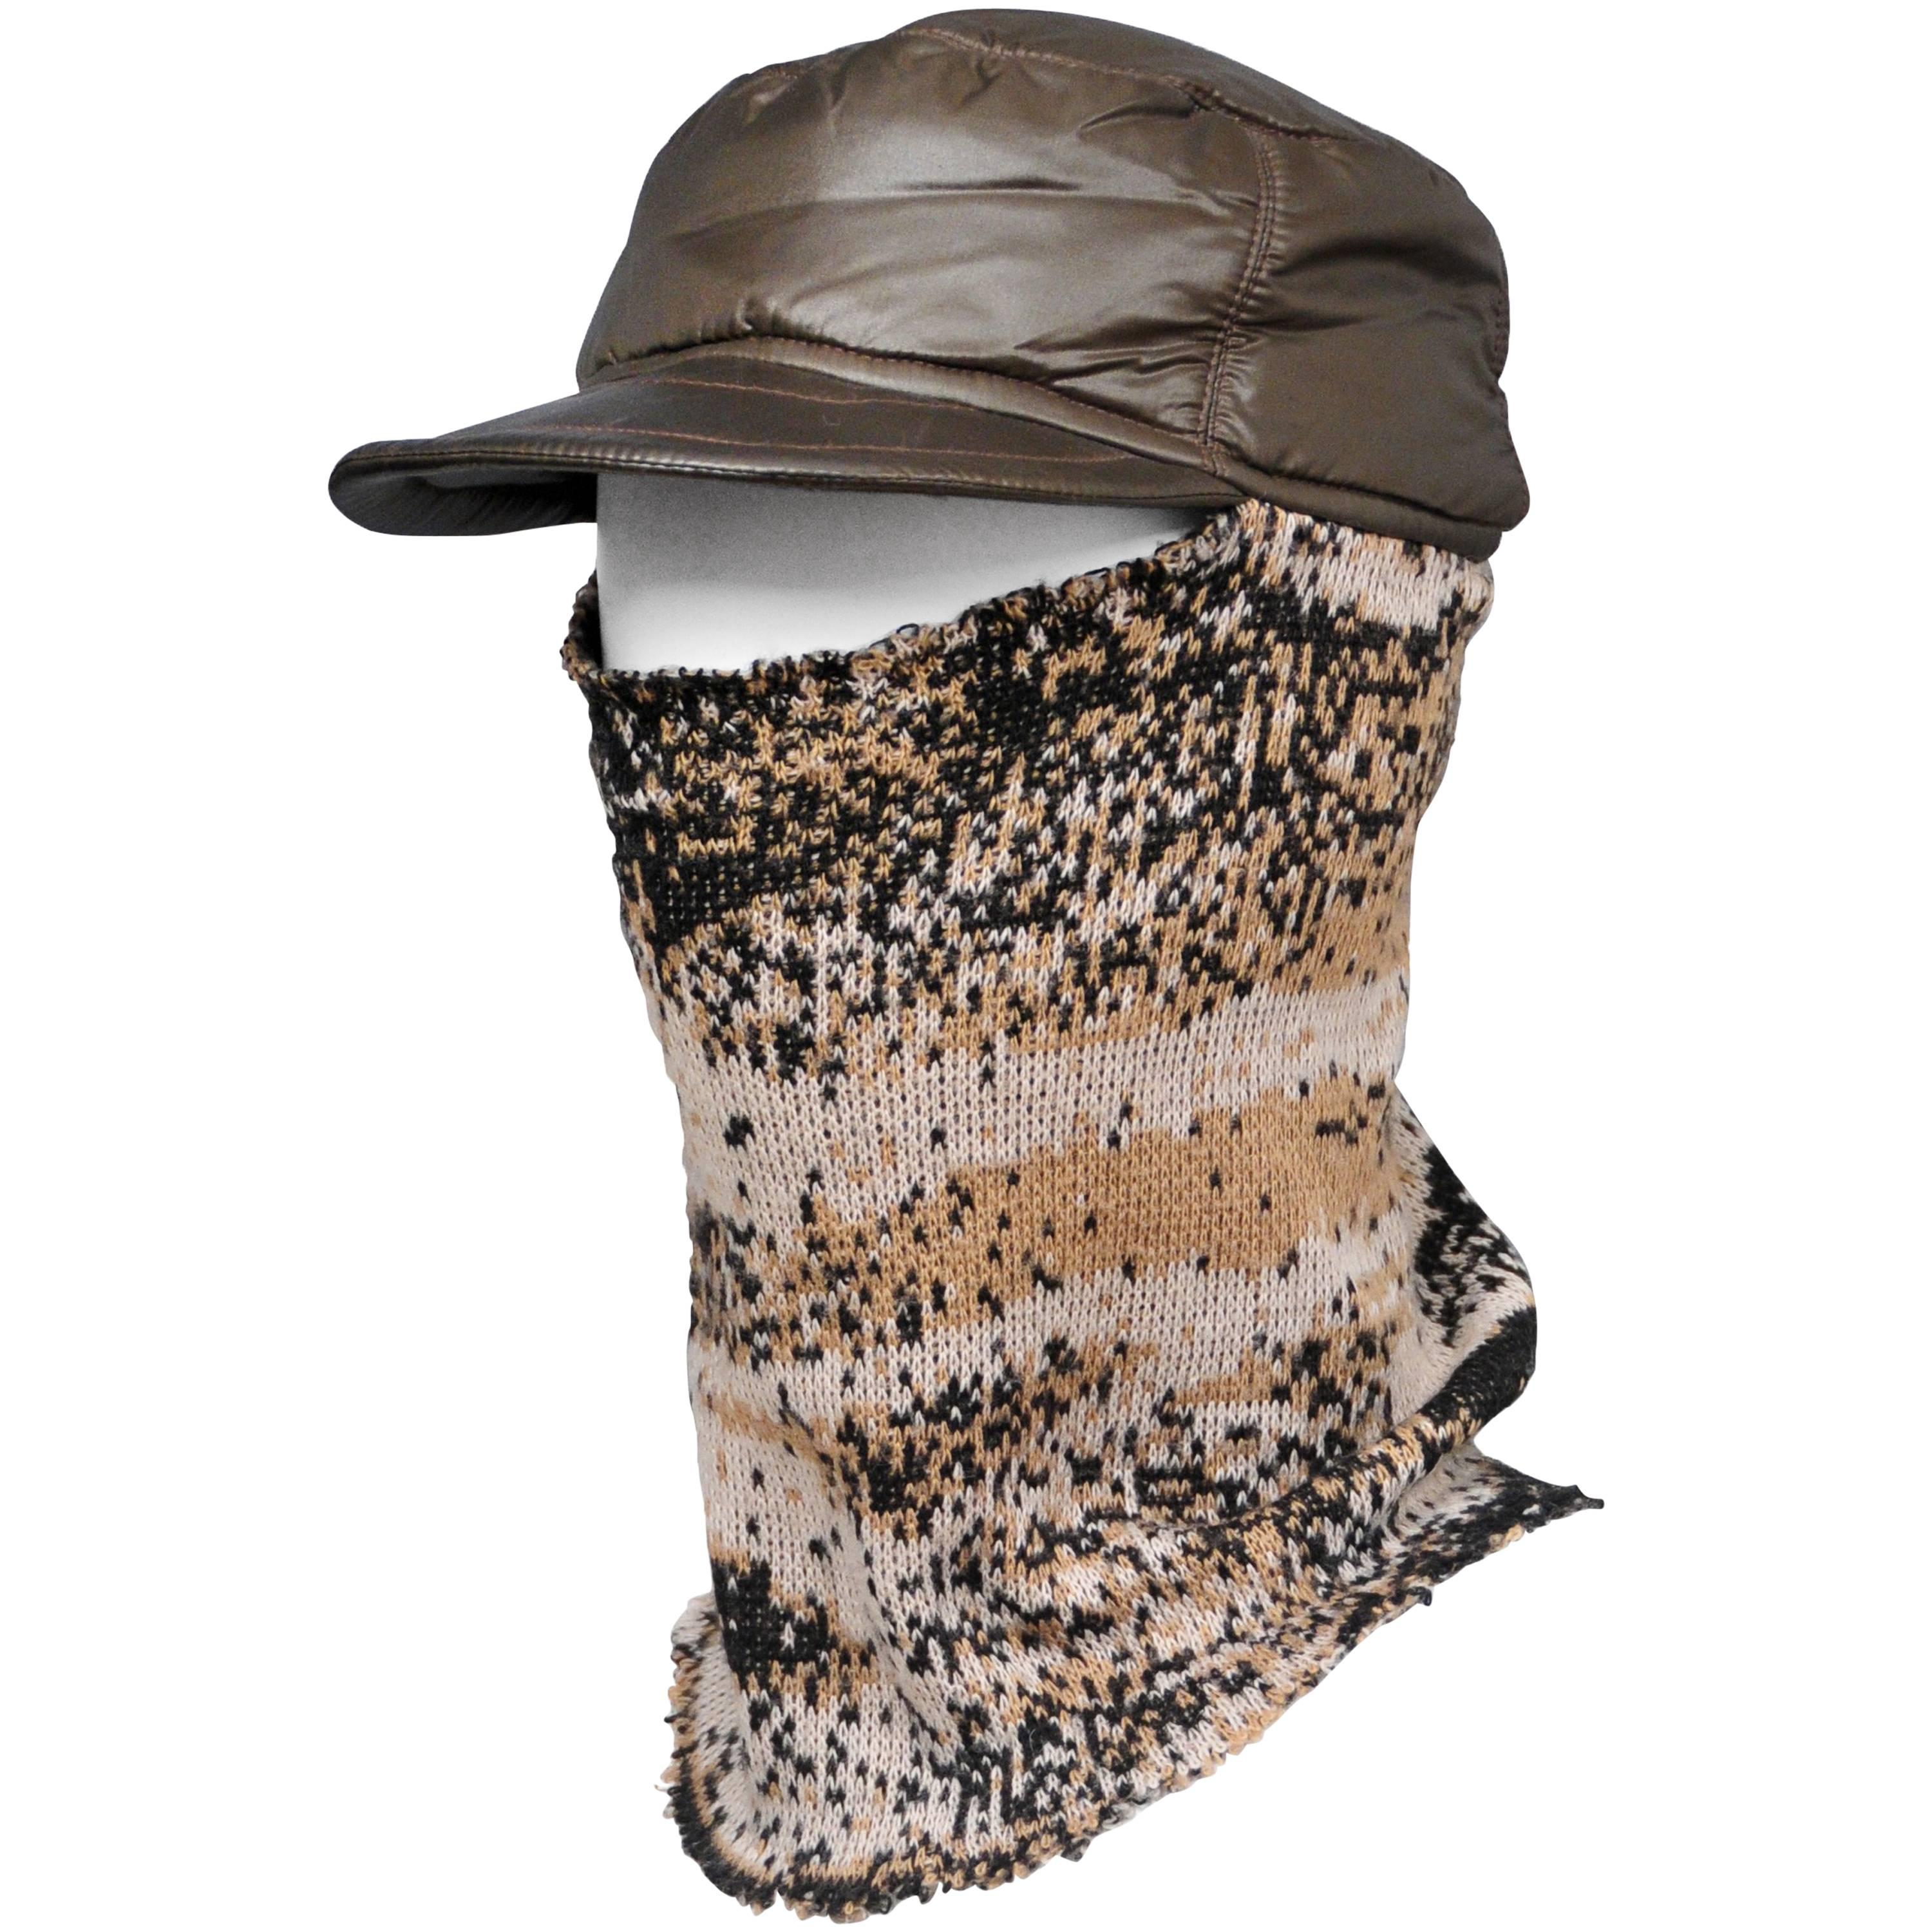 Raf Simons Digital Camouflage Knit & Nylon Balaclava Hat 2002-03